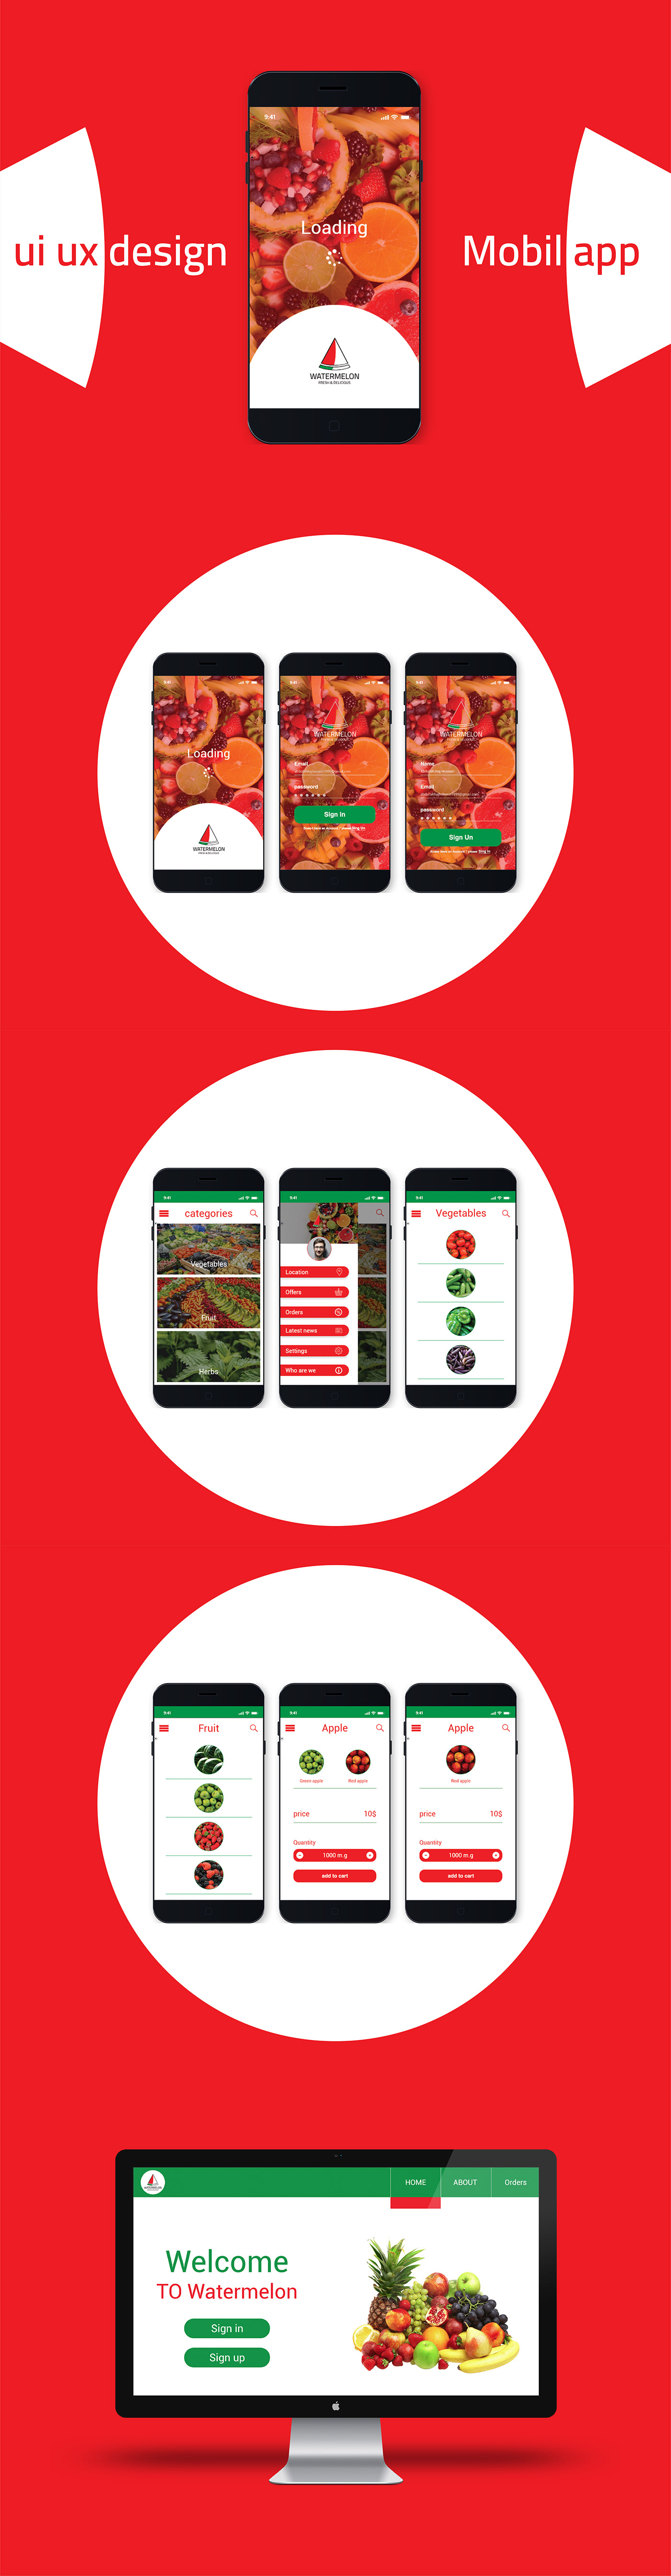 logo brand uxui Mobil App identity vegetables fruits herbs watermelon